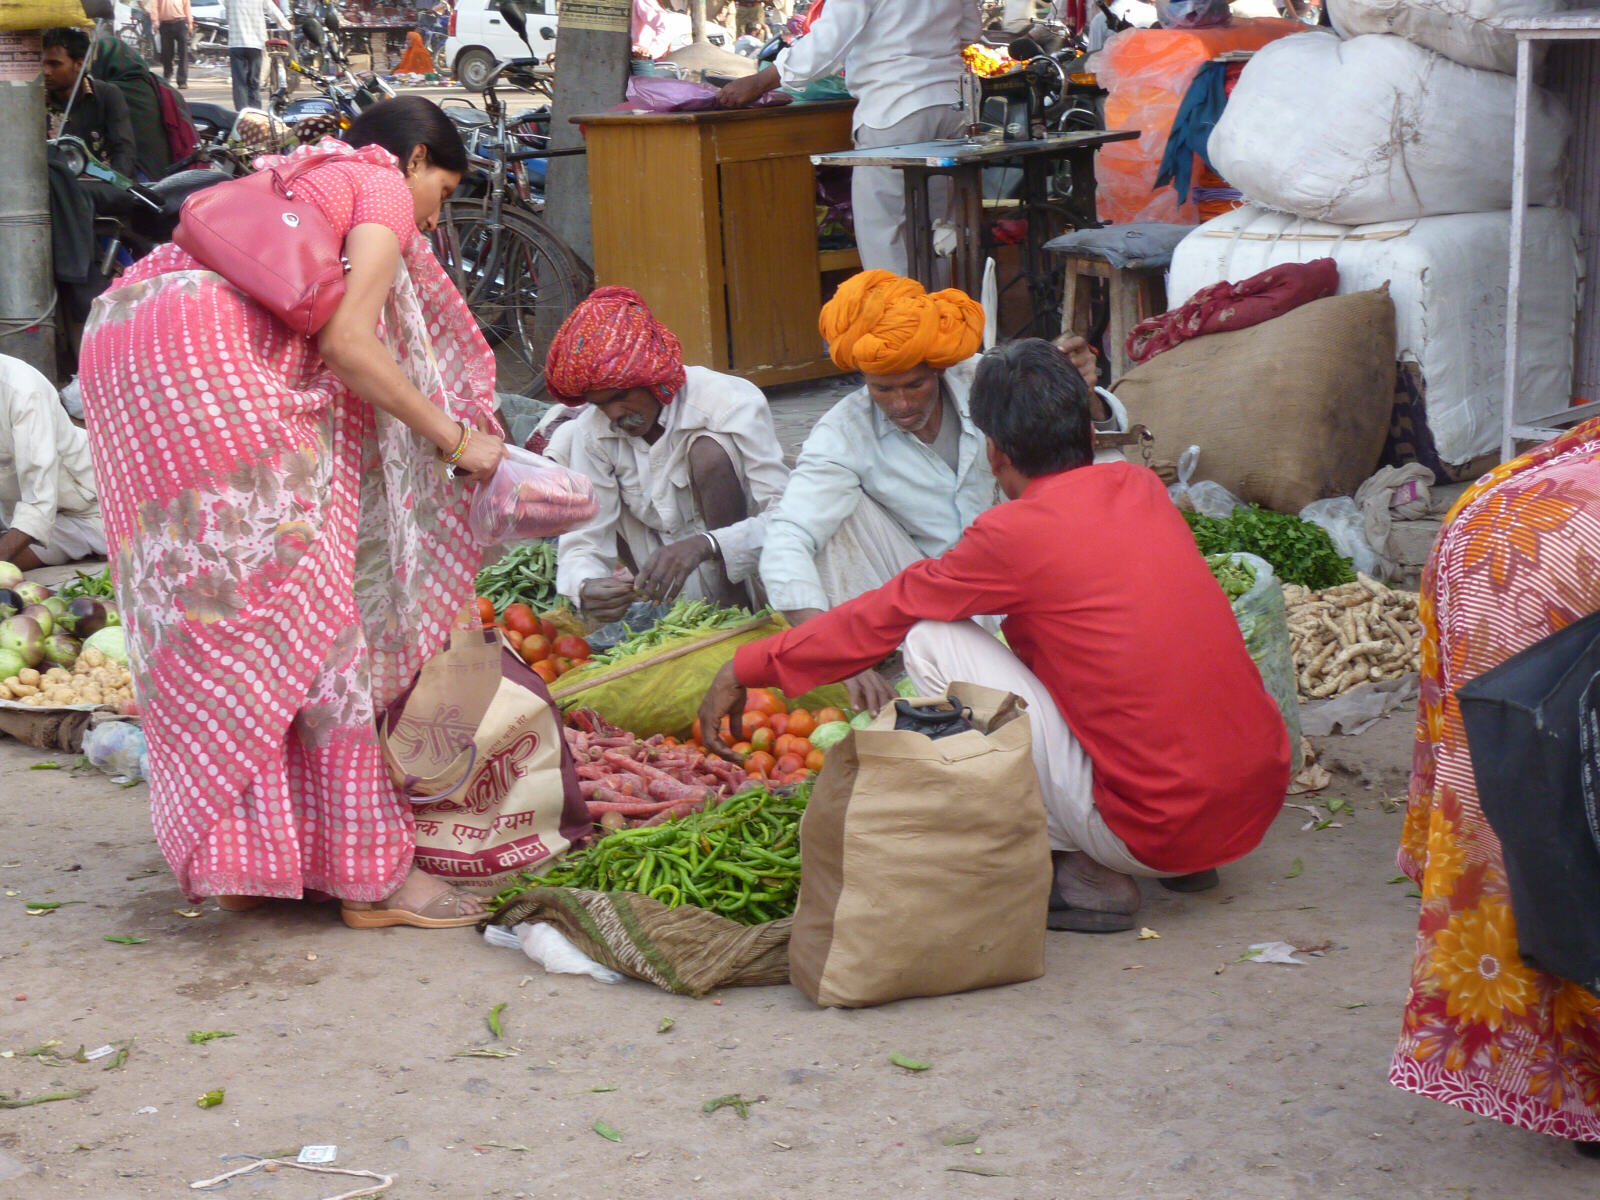 The vegetable market in Bundi, Rajasthan, India